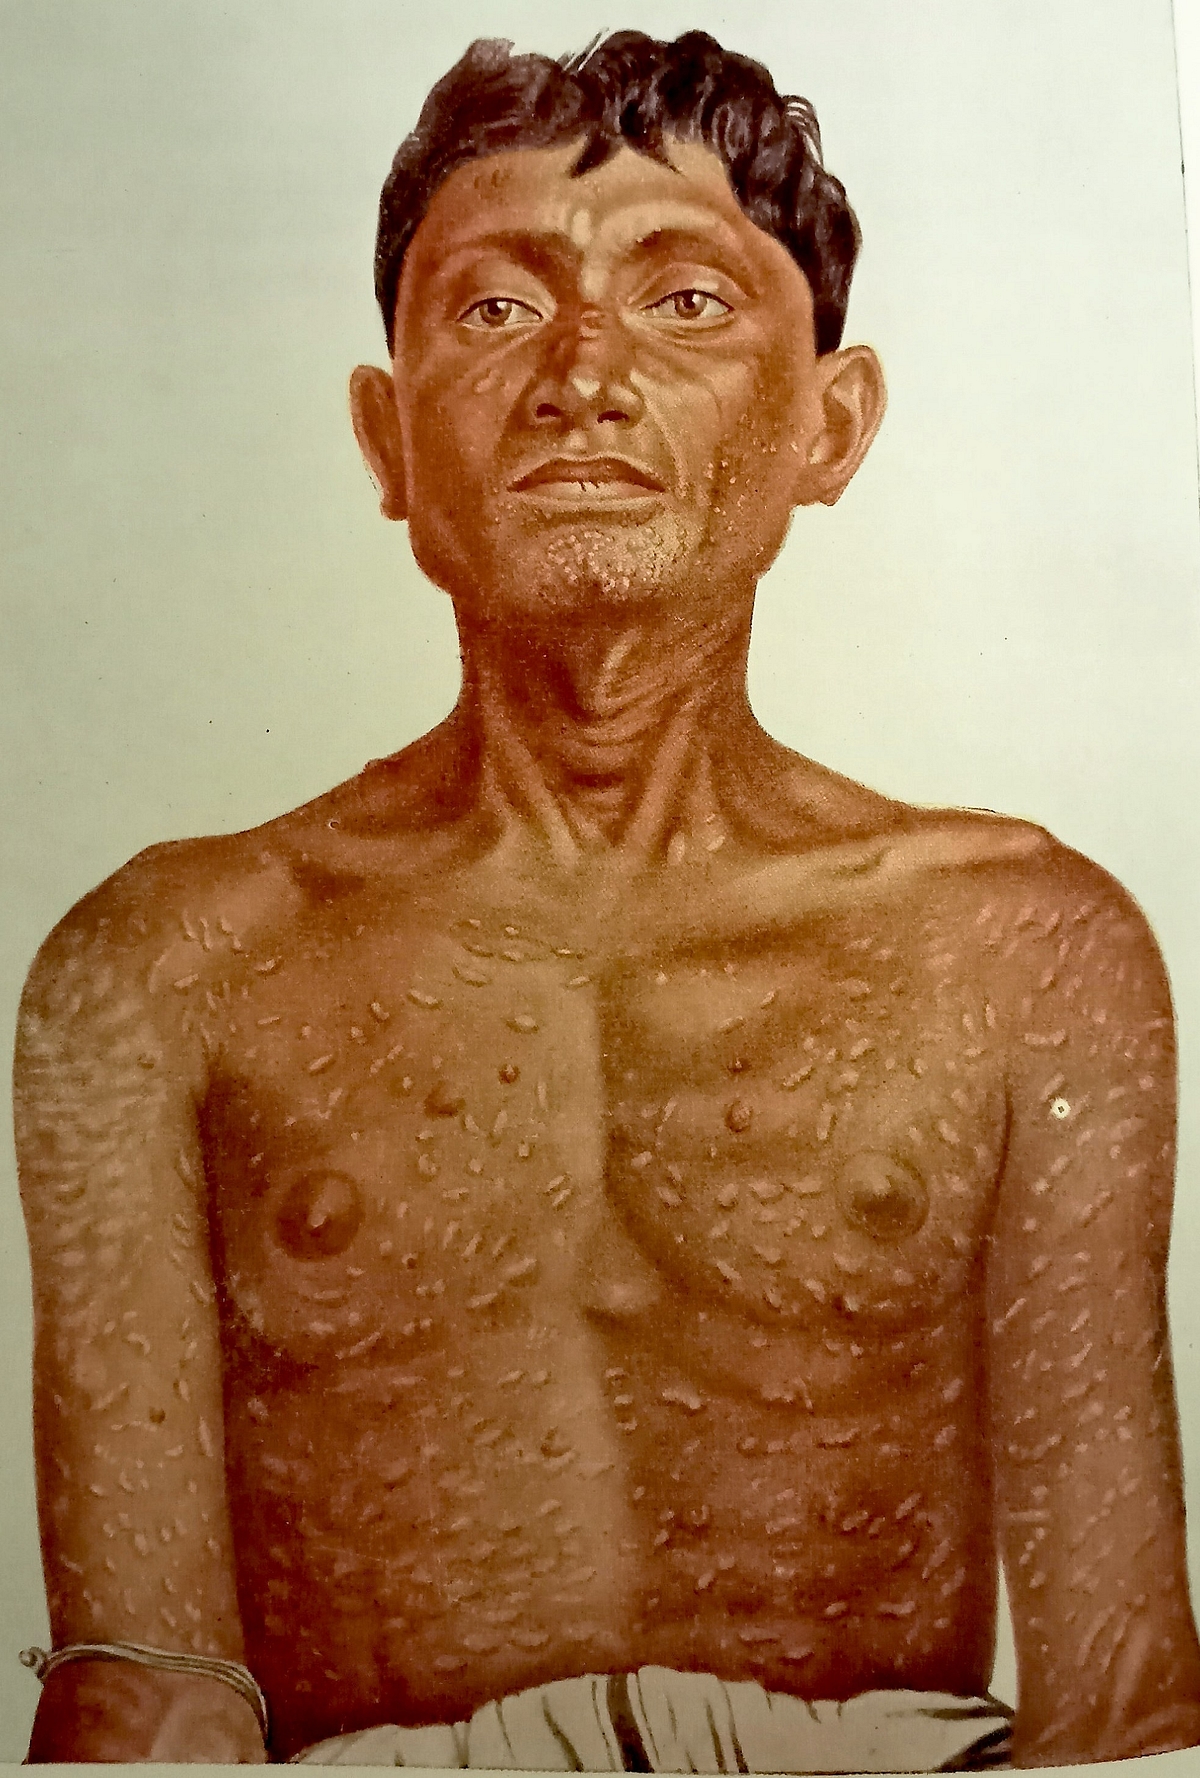 Figure 5. Brahmachari’s Dermal Leishmaniasis (From ‘Gleanings From My Researches’, by Upendranath Brahmachari, Calcutta University Press, 1940)